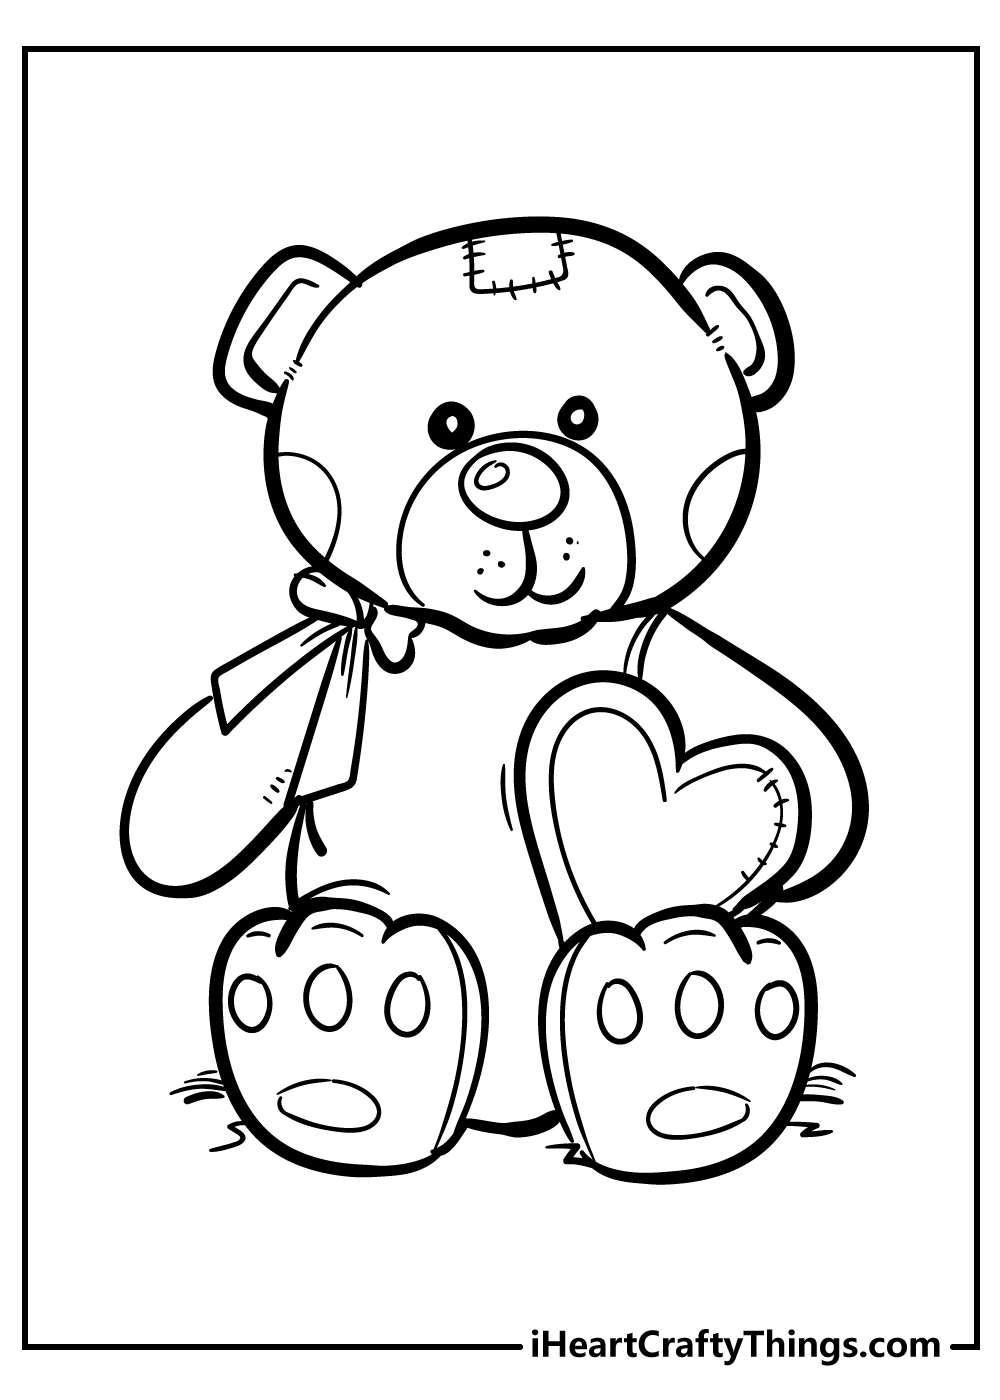 Teddy Bear Coloring Original Sheet for children free download